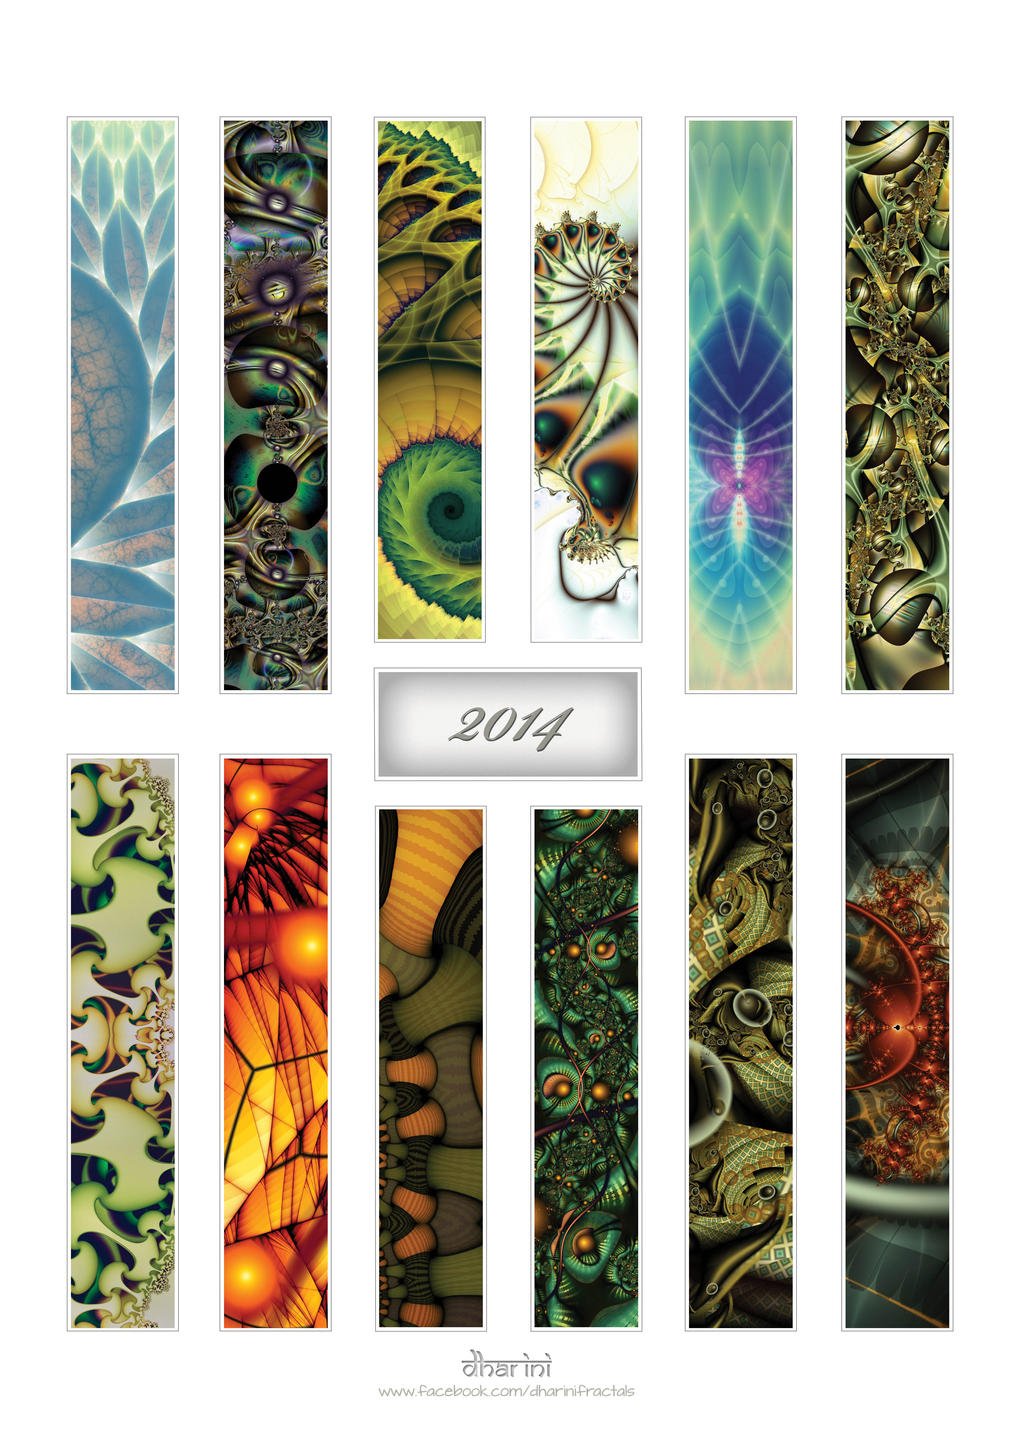 Calendar 2014